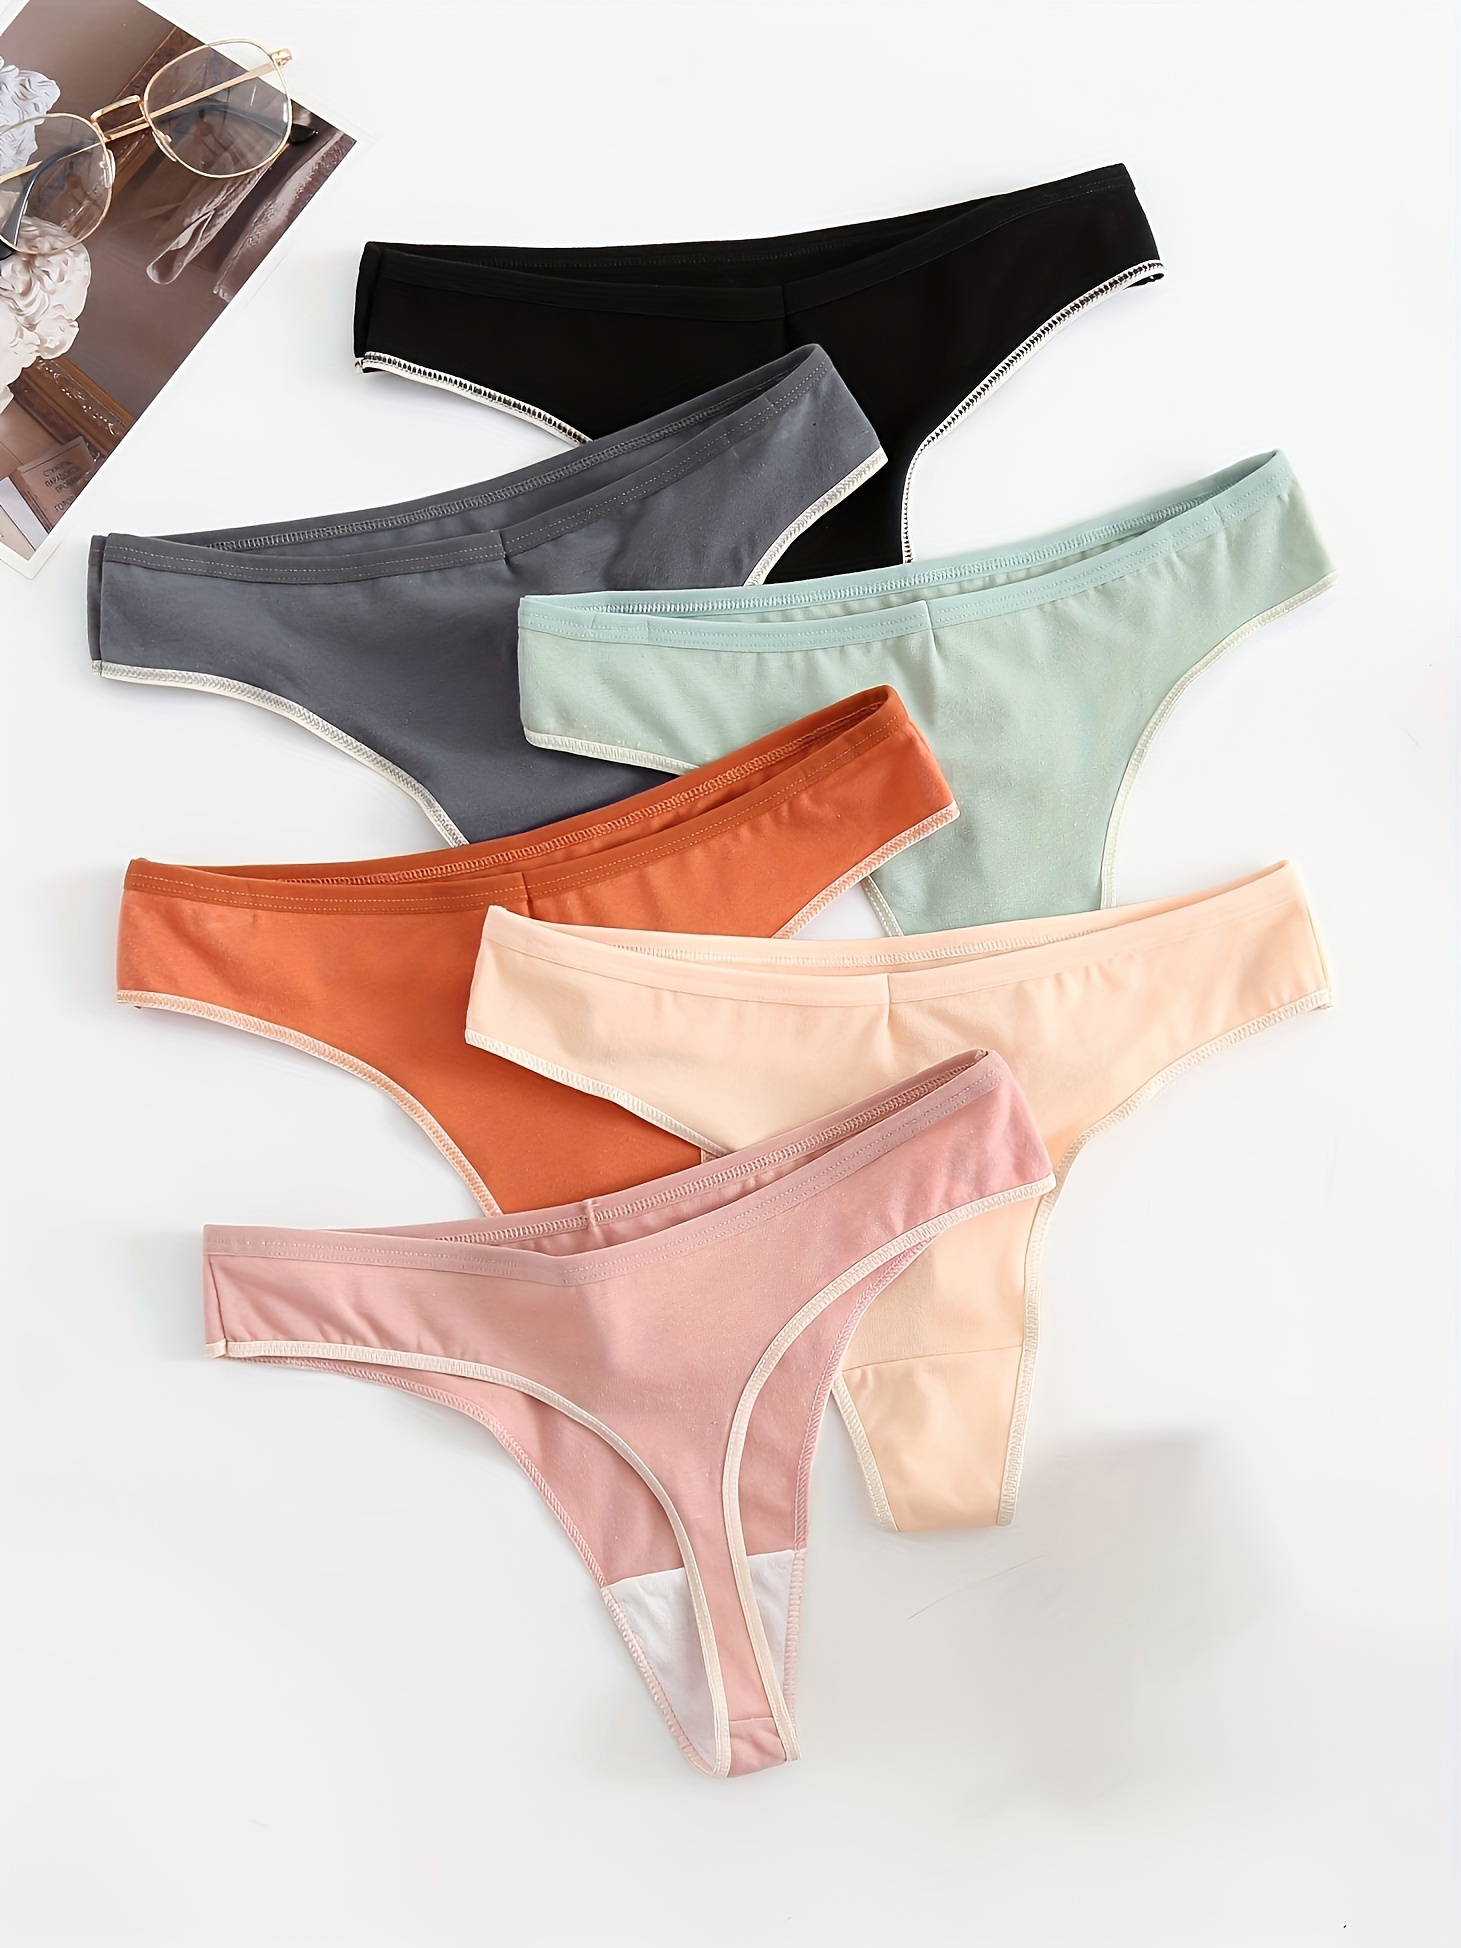 Women's Cotton Letter Panties, Sporty Seamless Low Waist Thongs